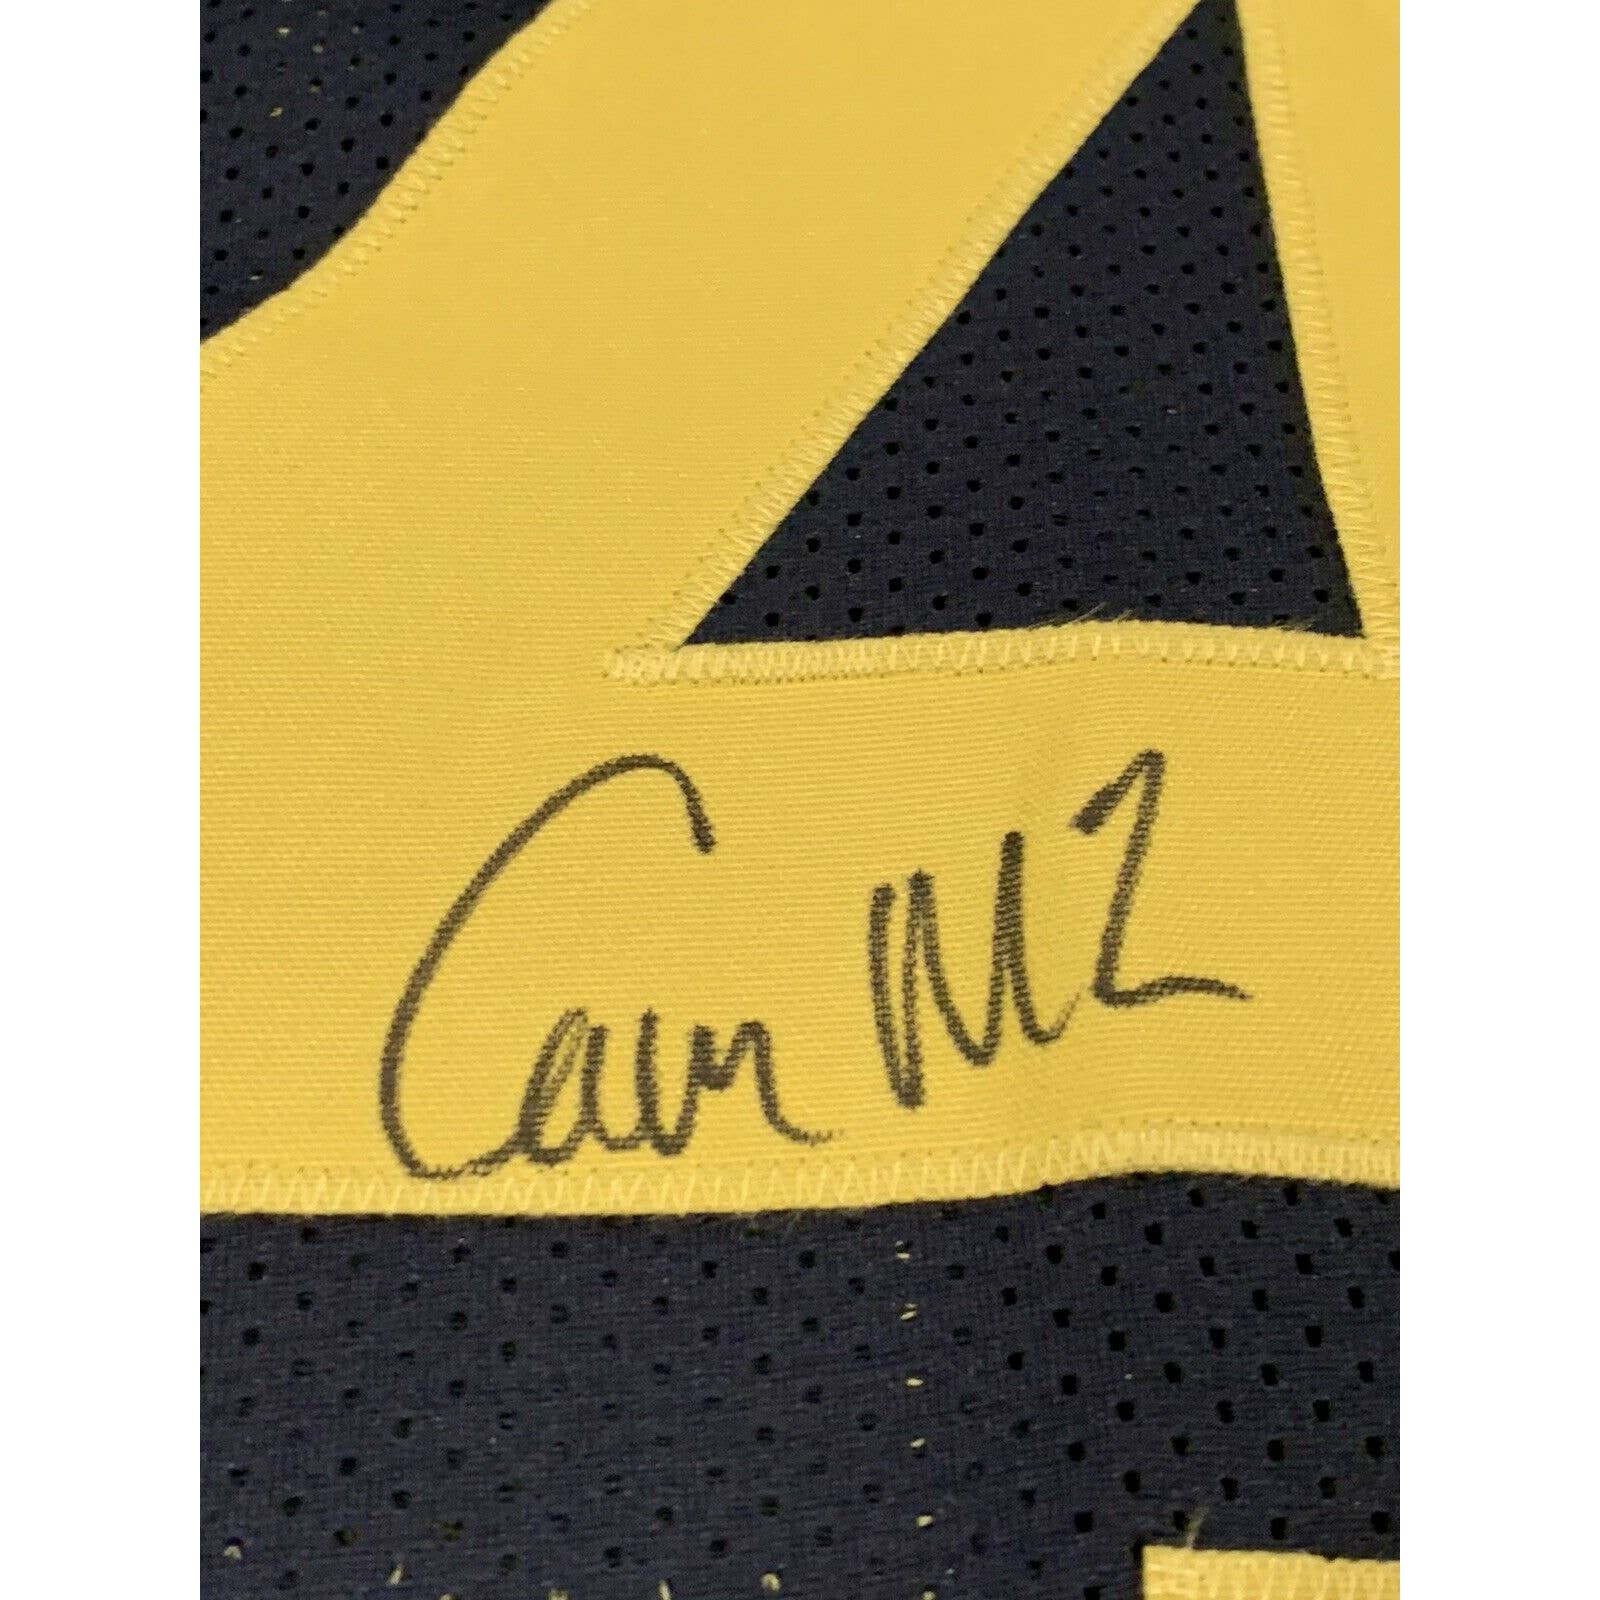 Cameron McGrone Autographed/Signed Jersey Beckett COA Michigan Wolverines - TreasuresEvolved